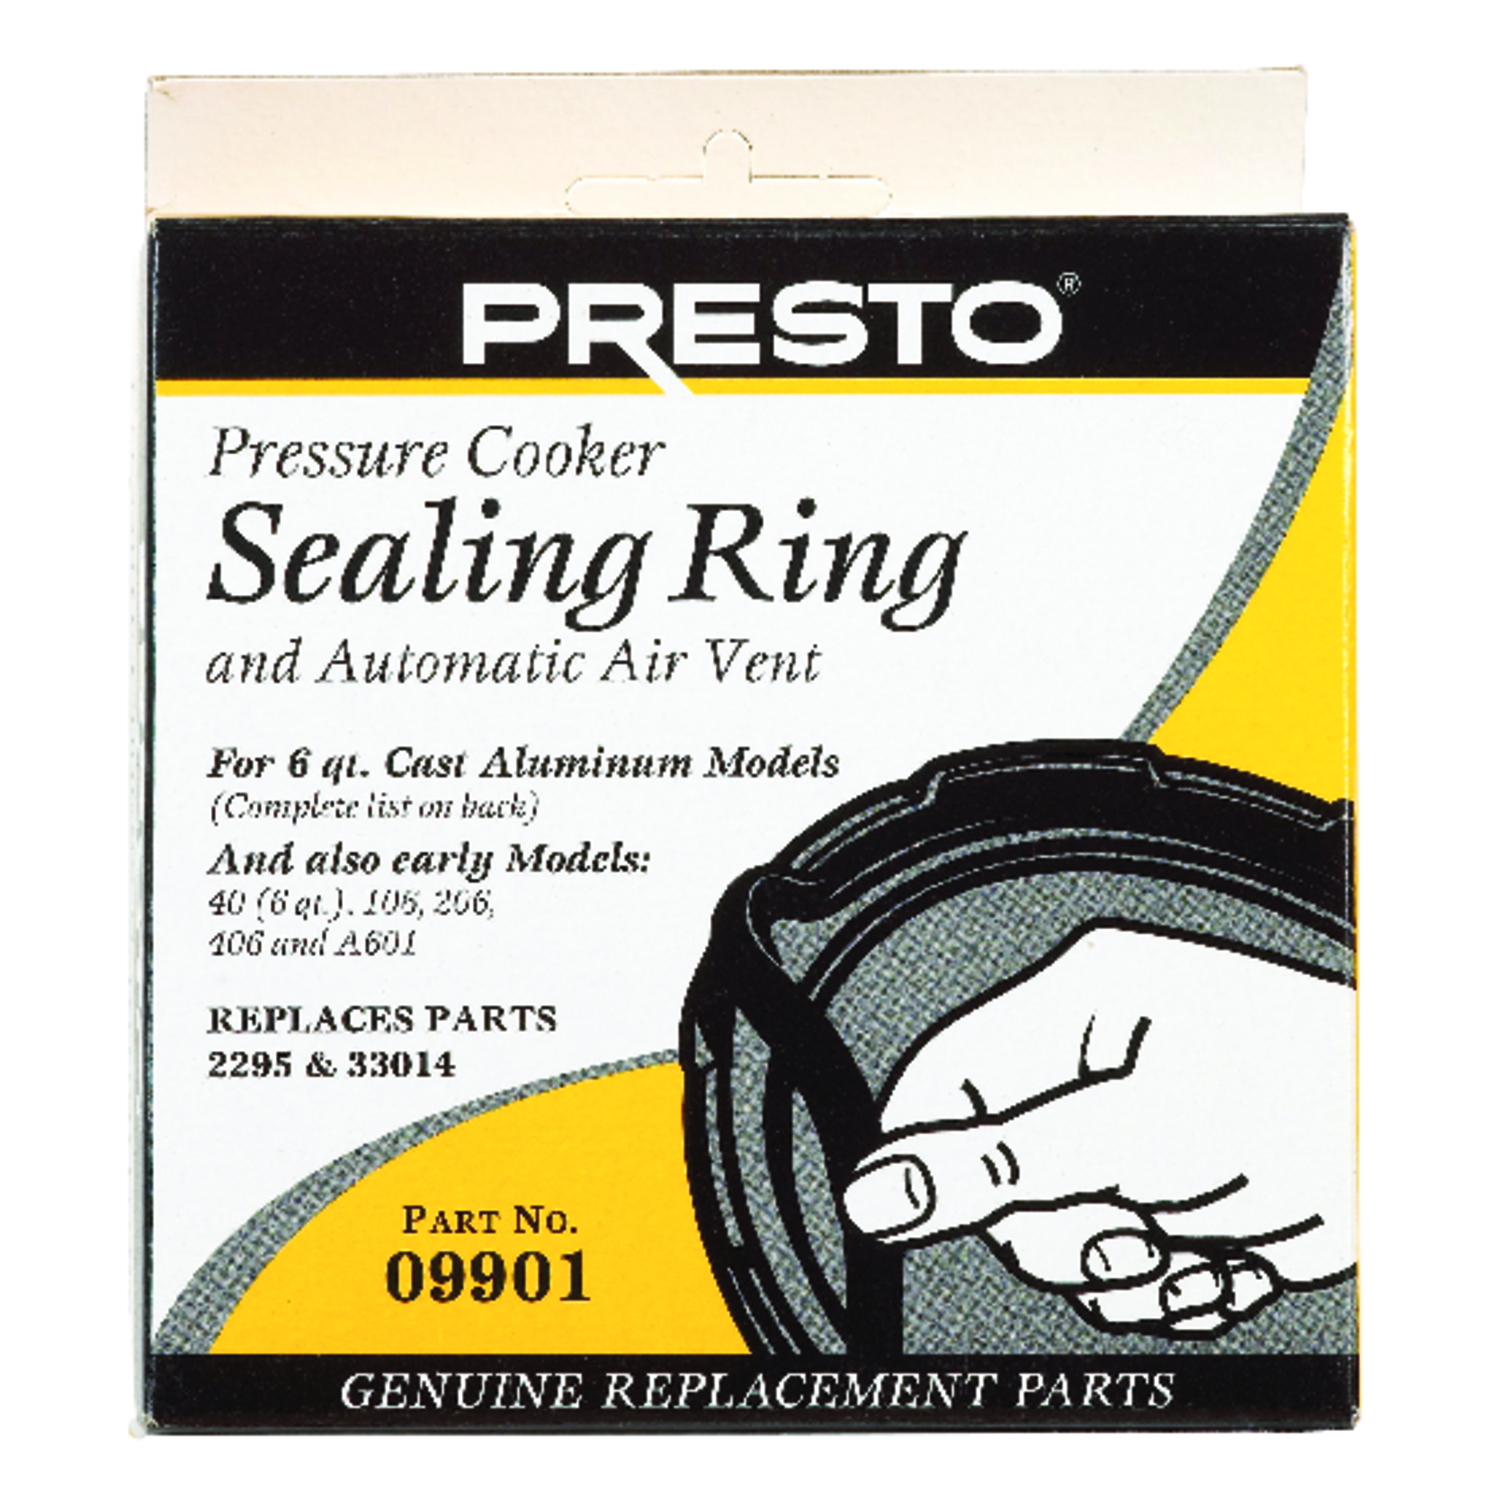  Original Sealing Ring for 6 Qt Power Pressure Cooker